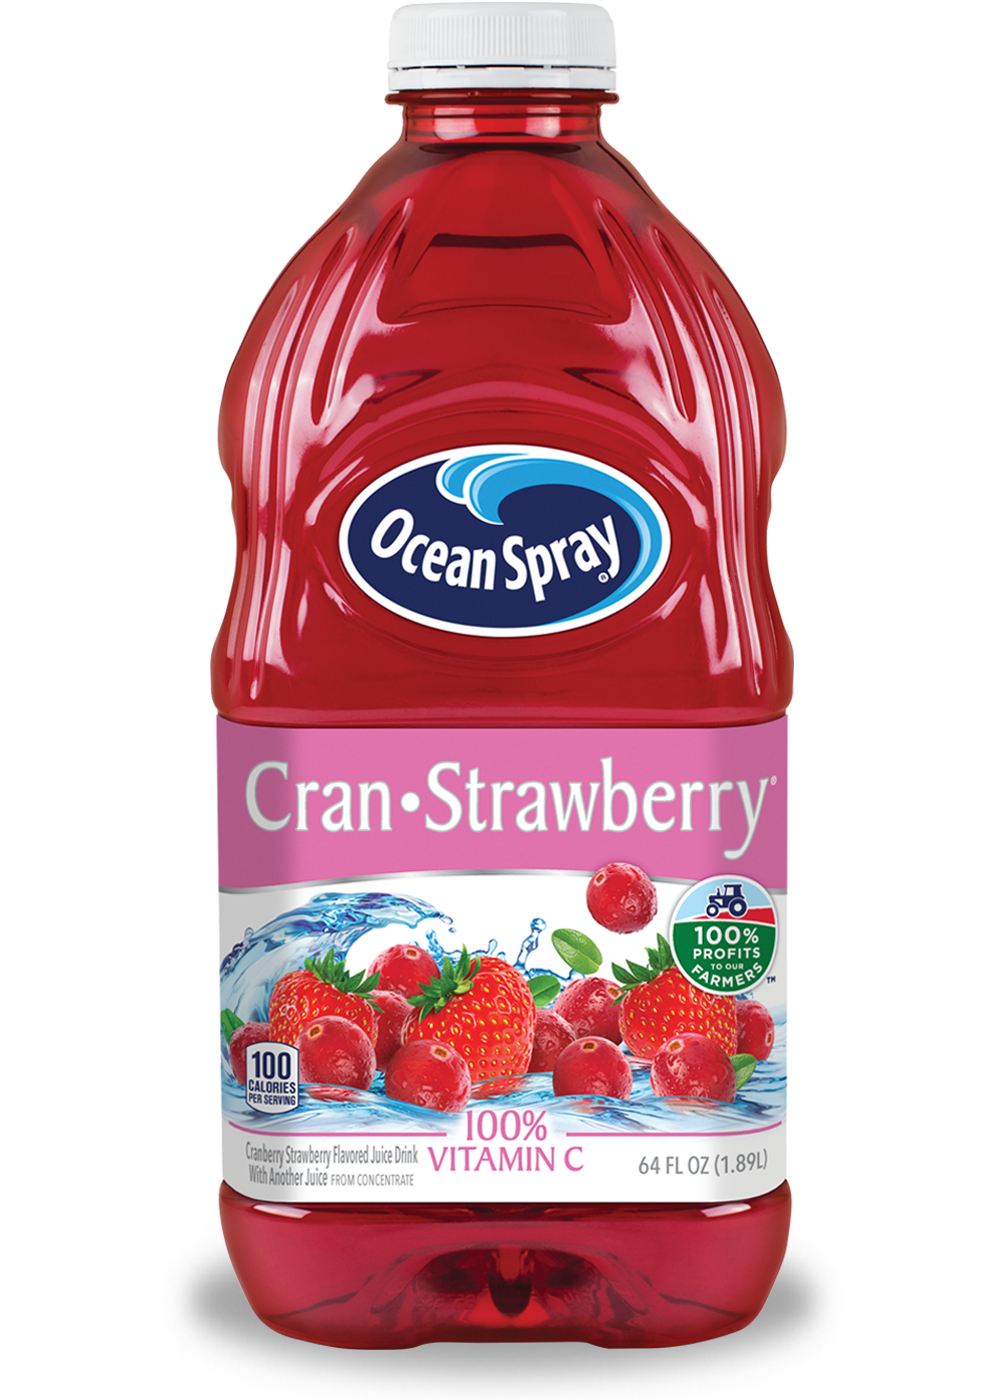 Cran•Strawberry® Cranberry Strawberry Juice Drink